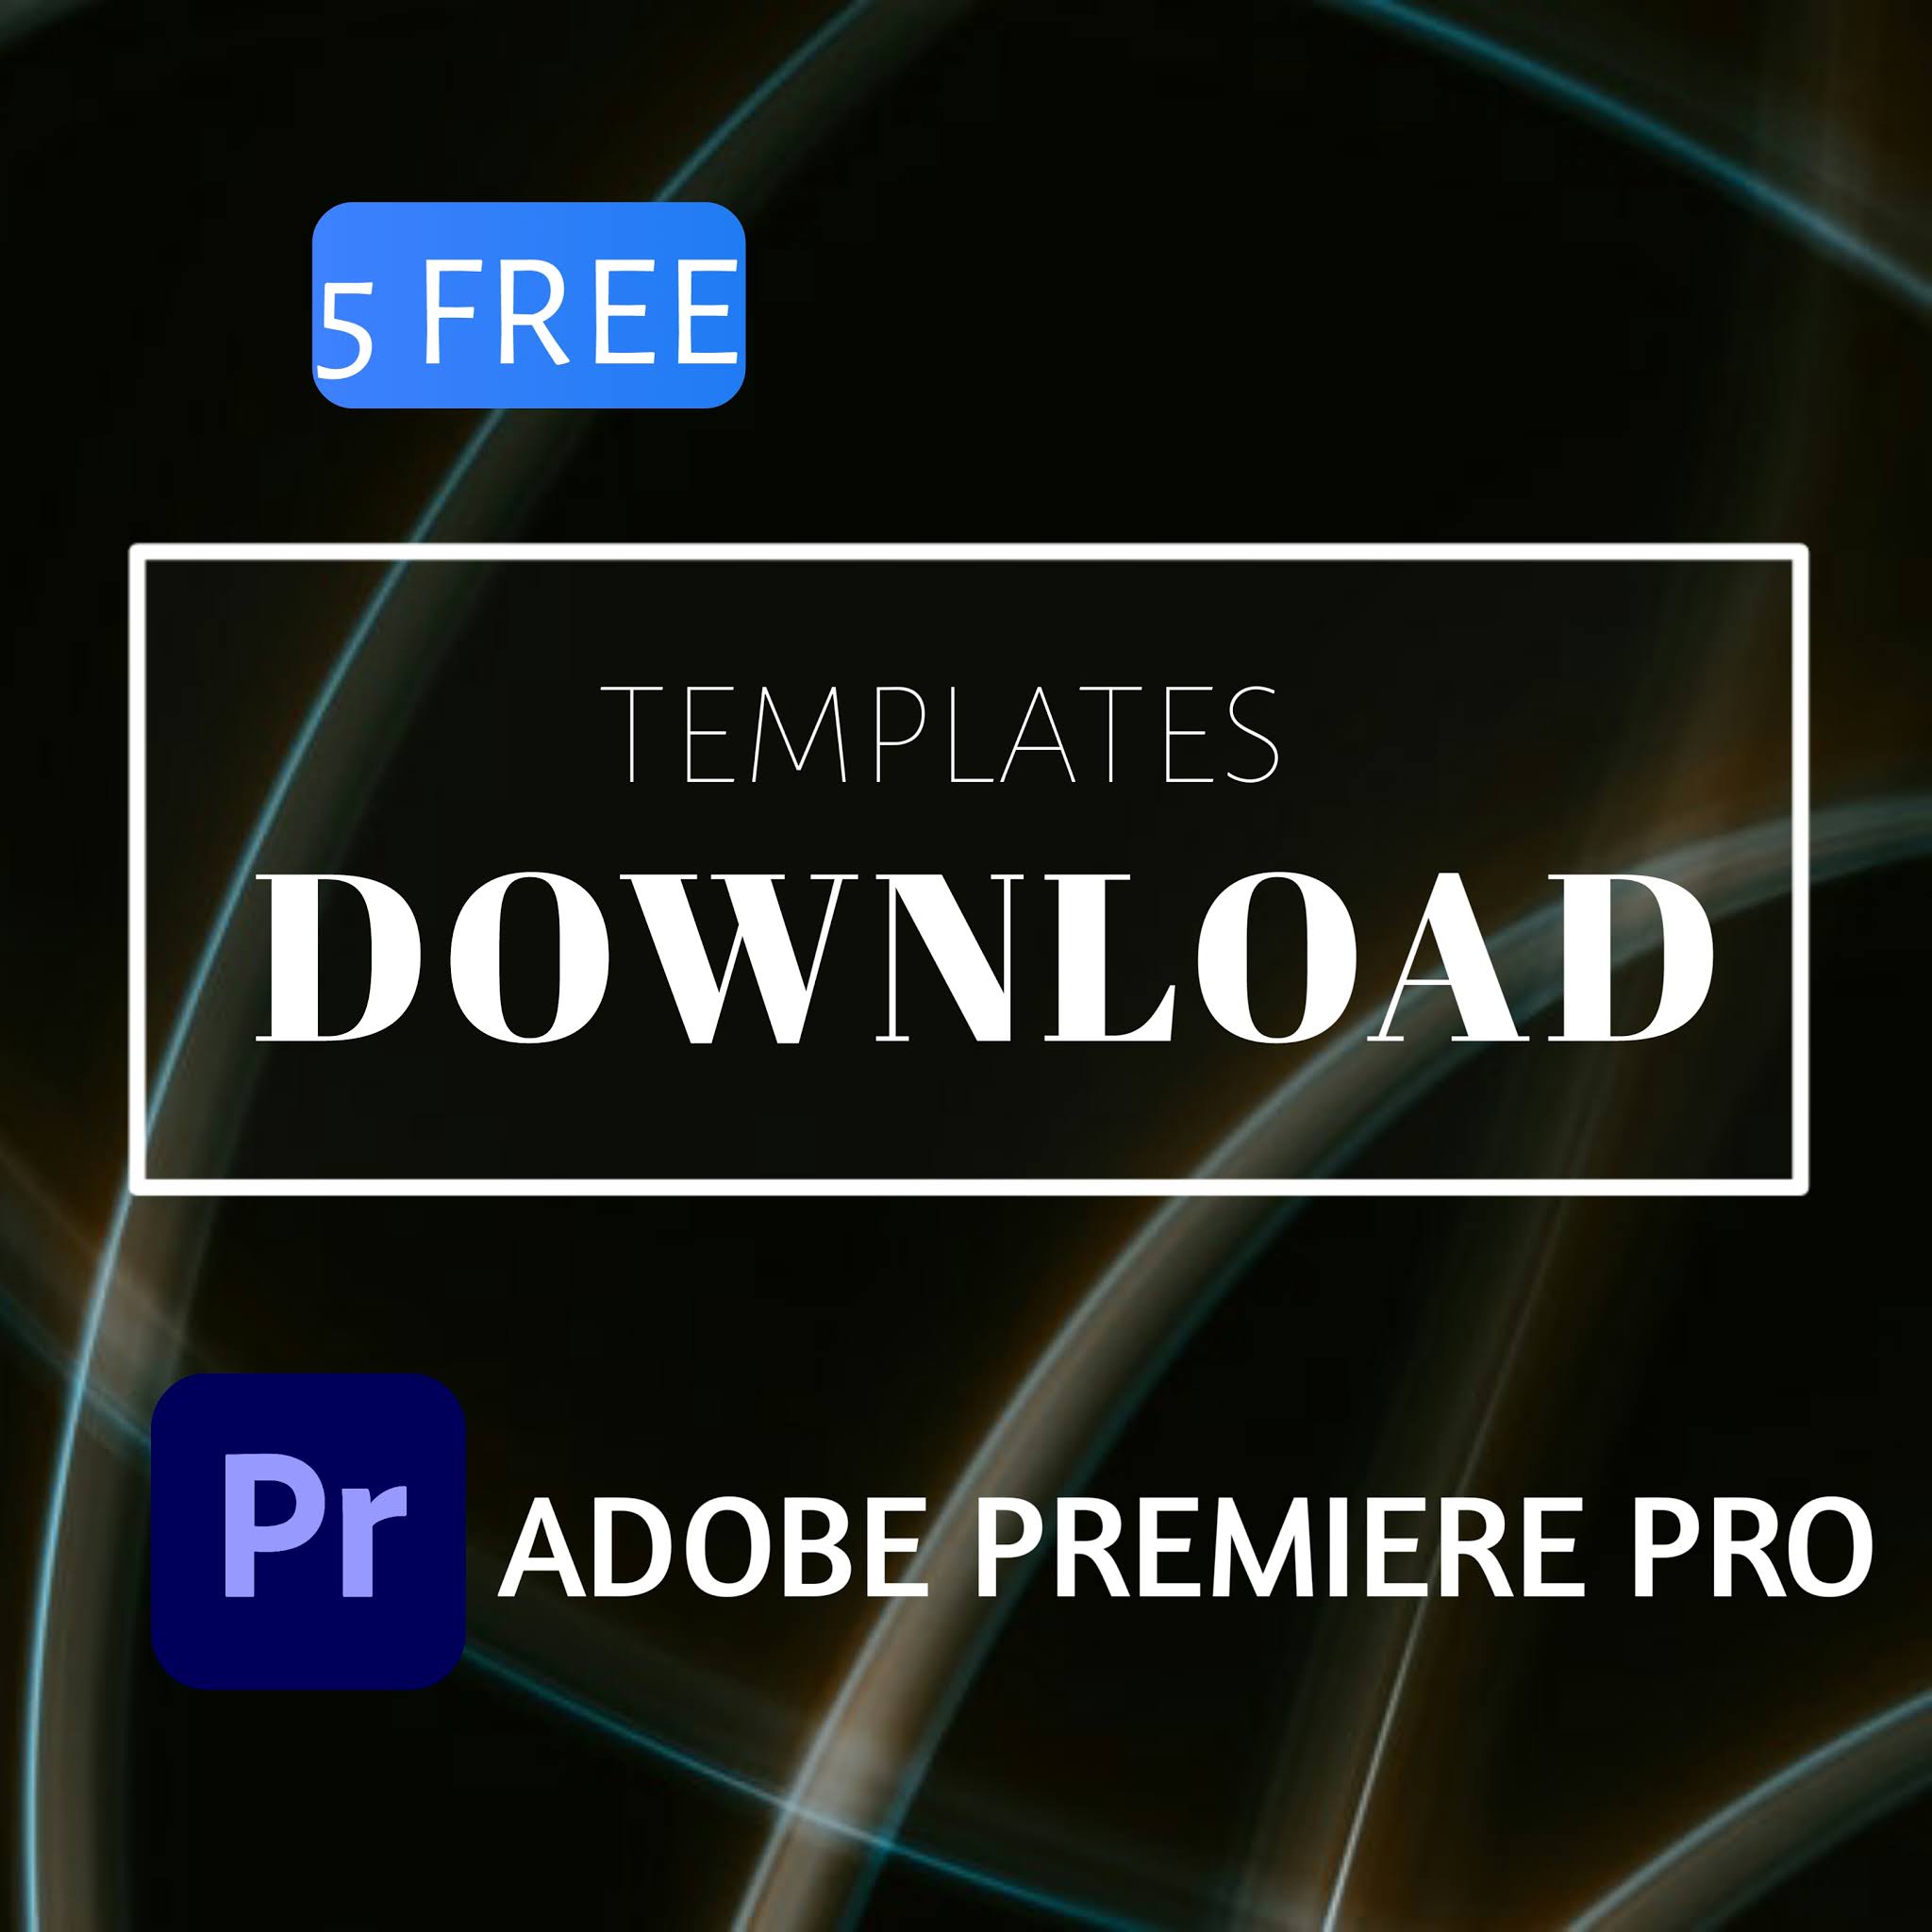 premiere pro travel templates free